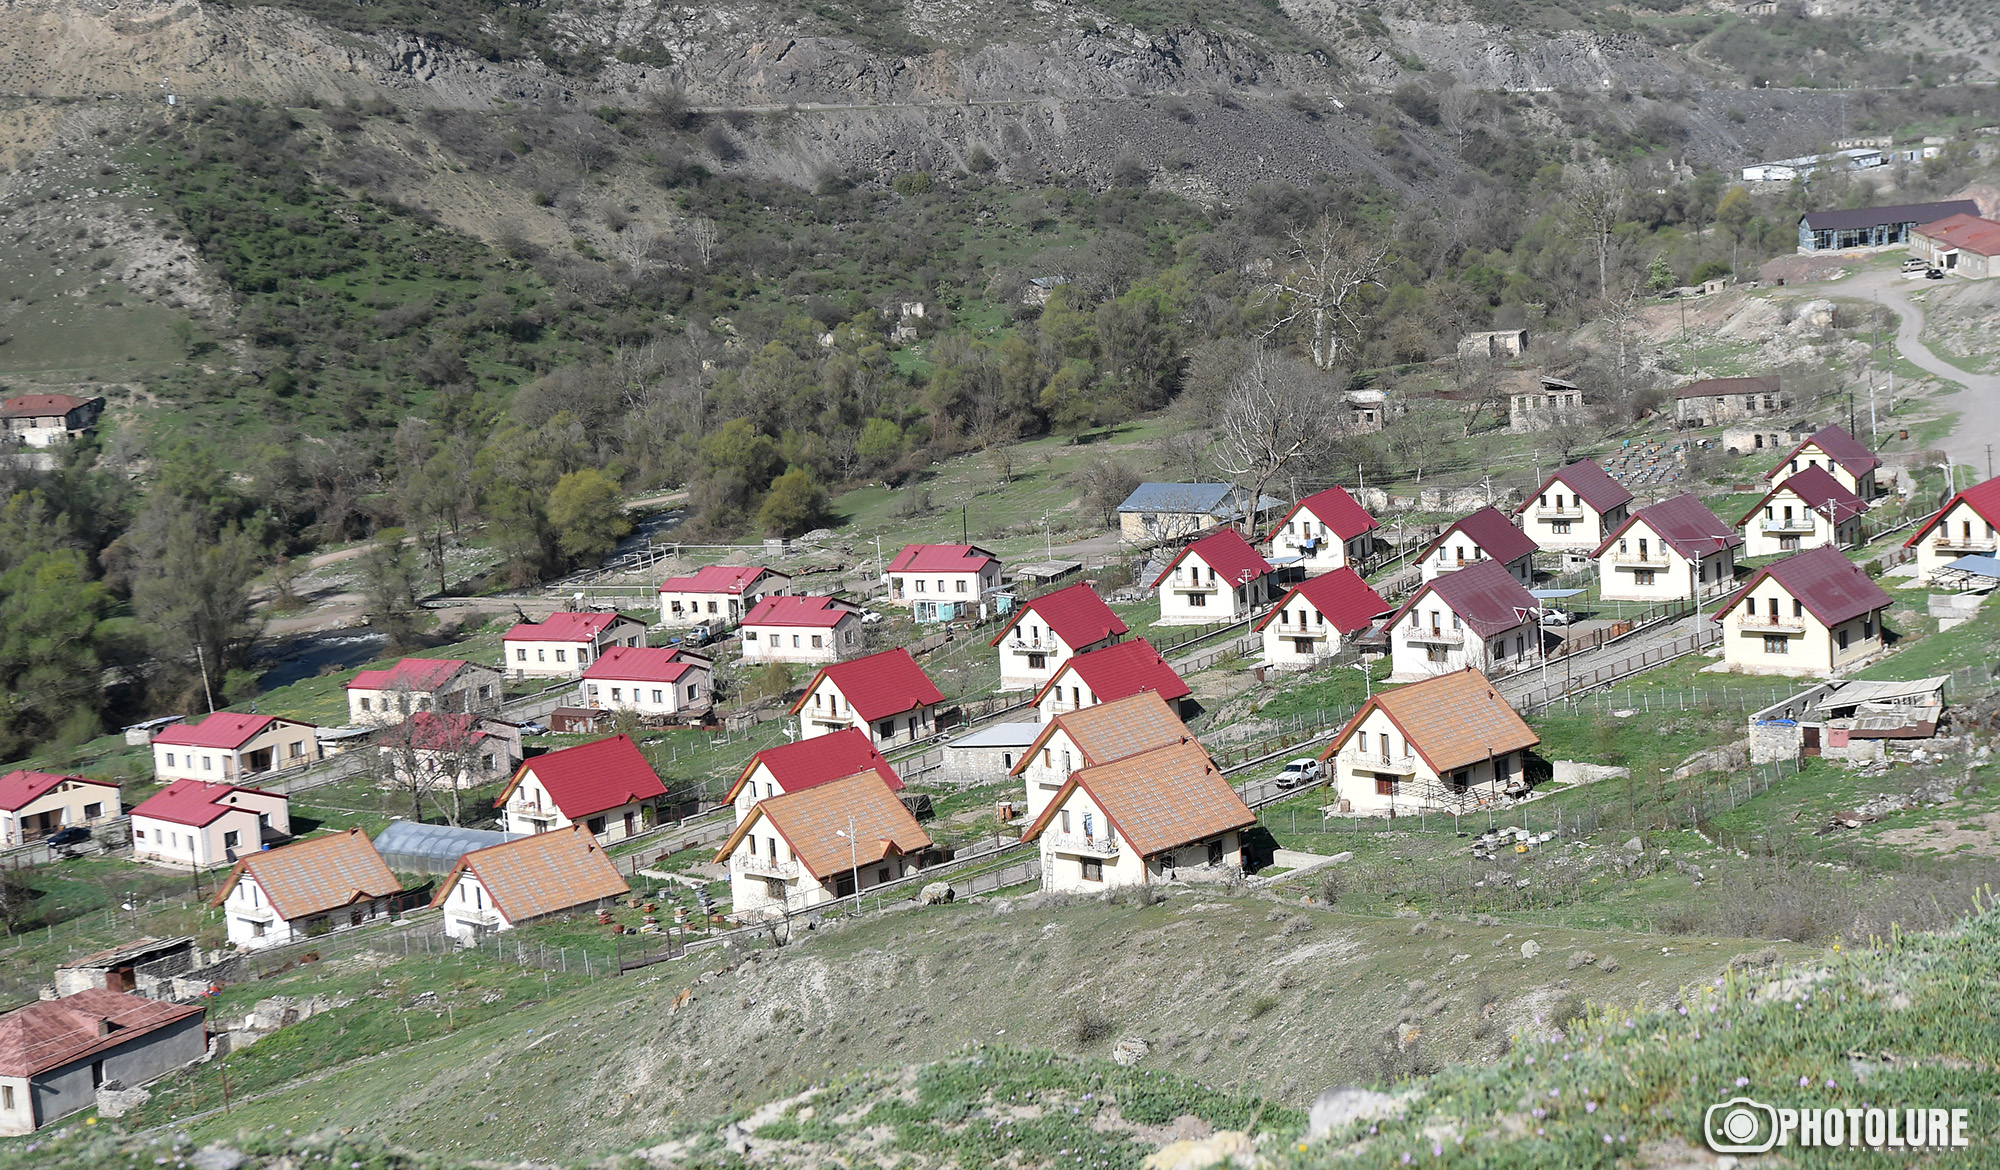 Karabakh president says Aghavno negotiations continue